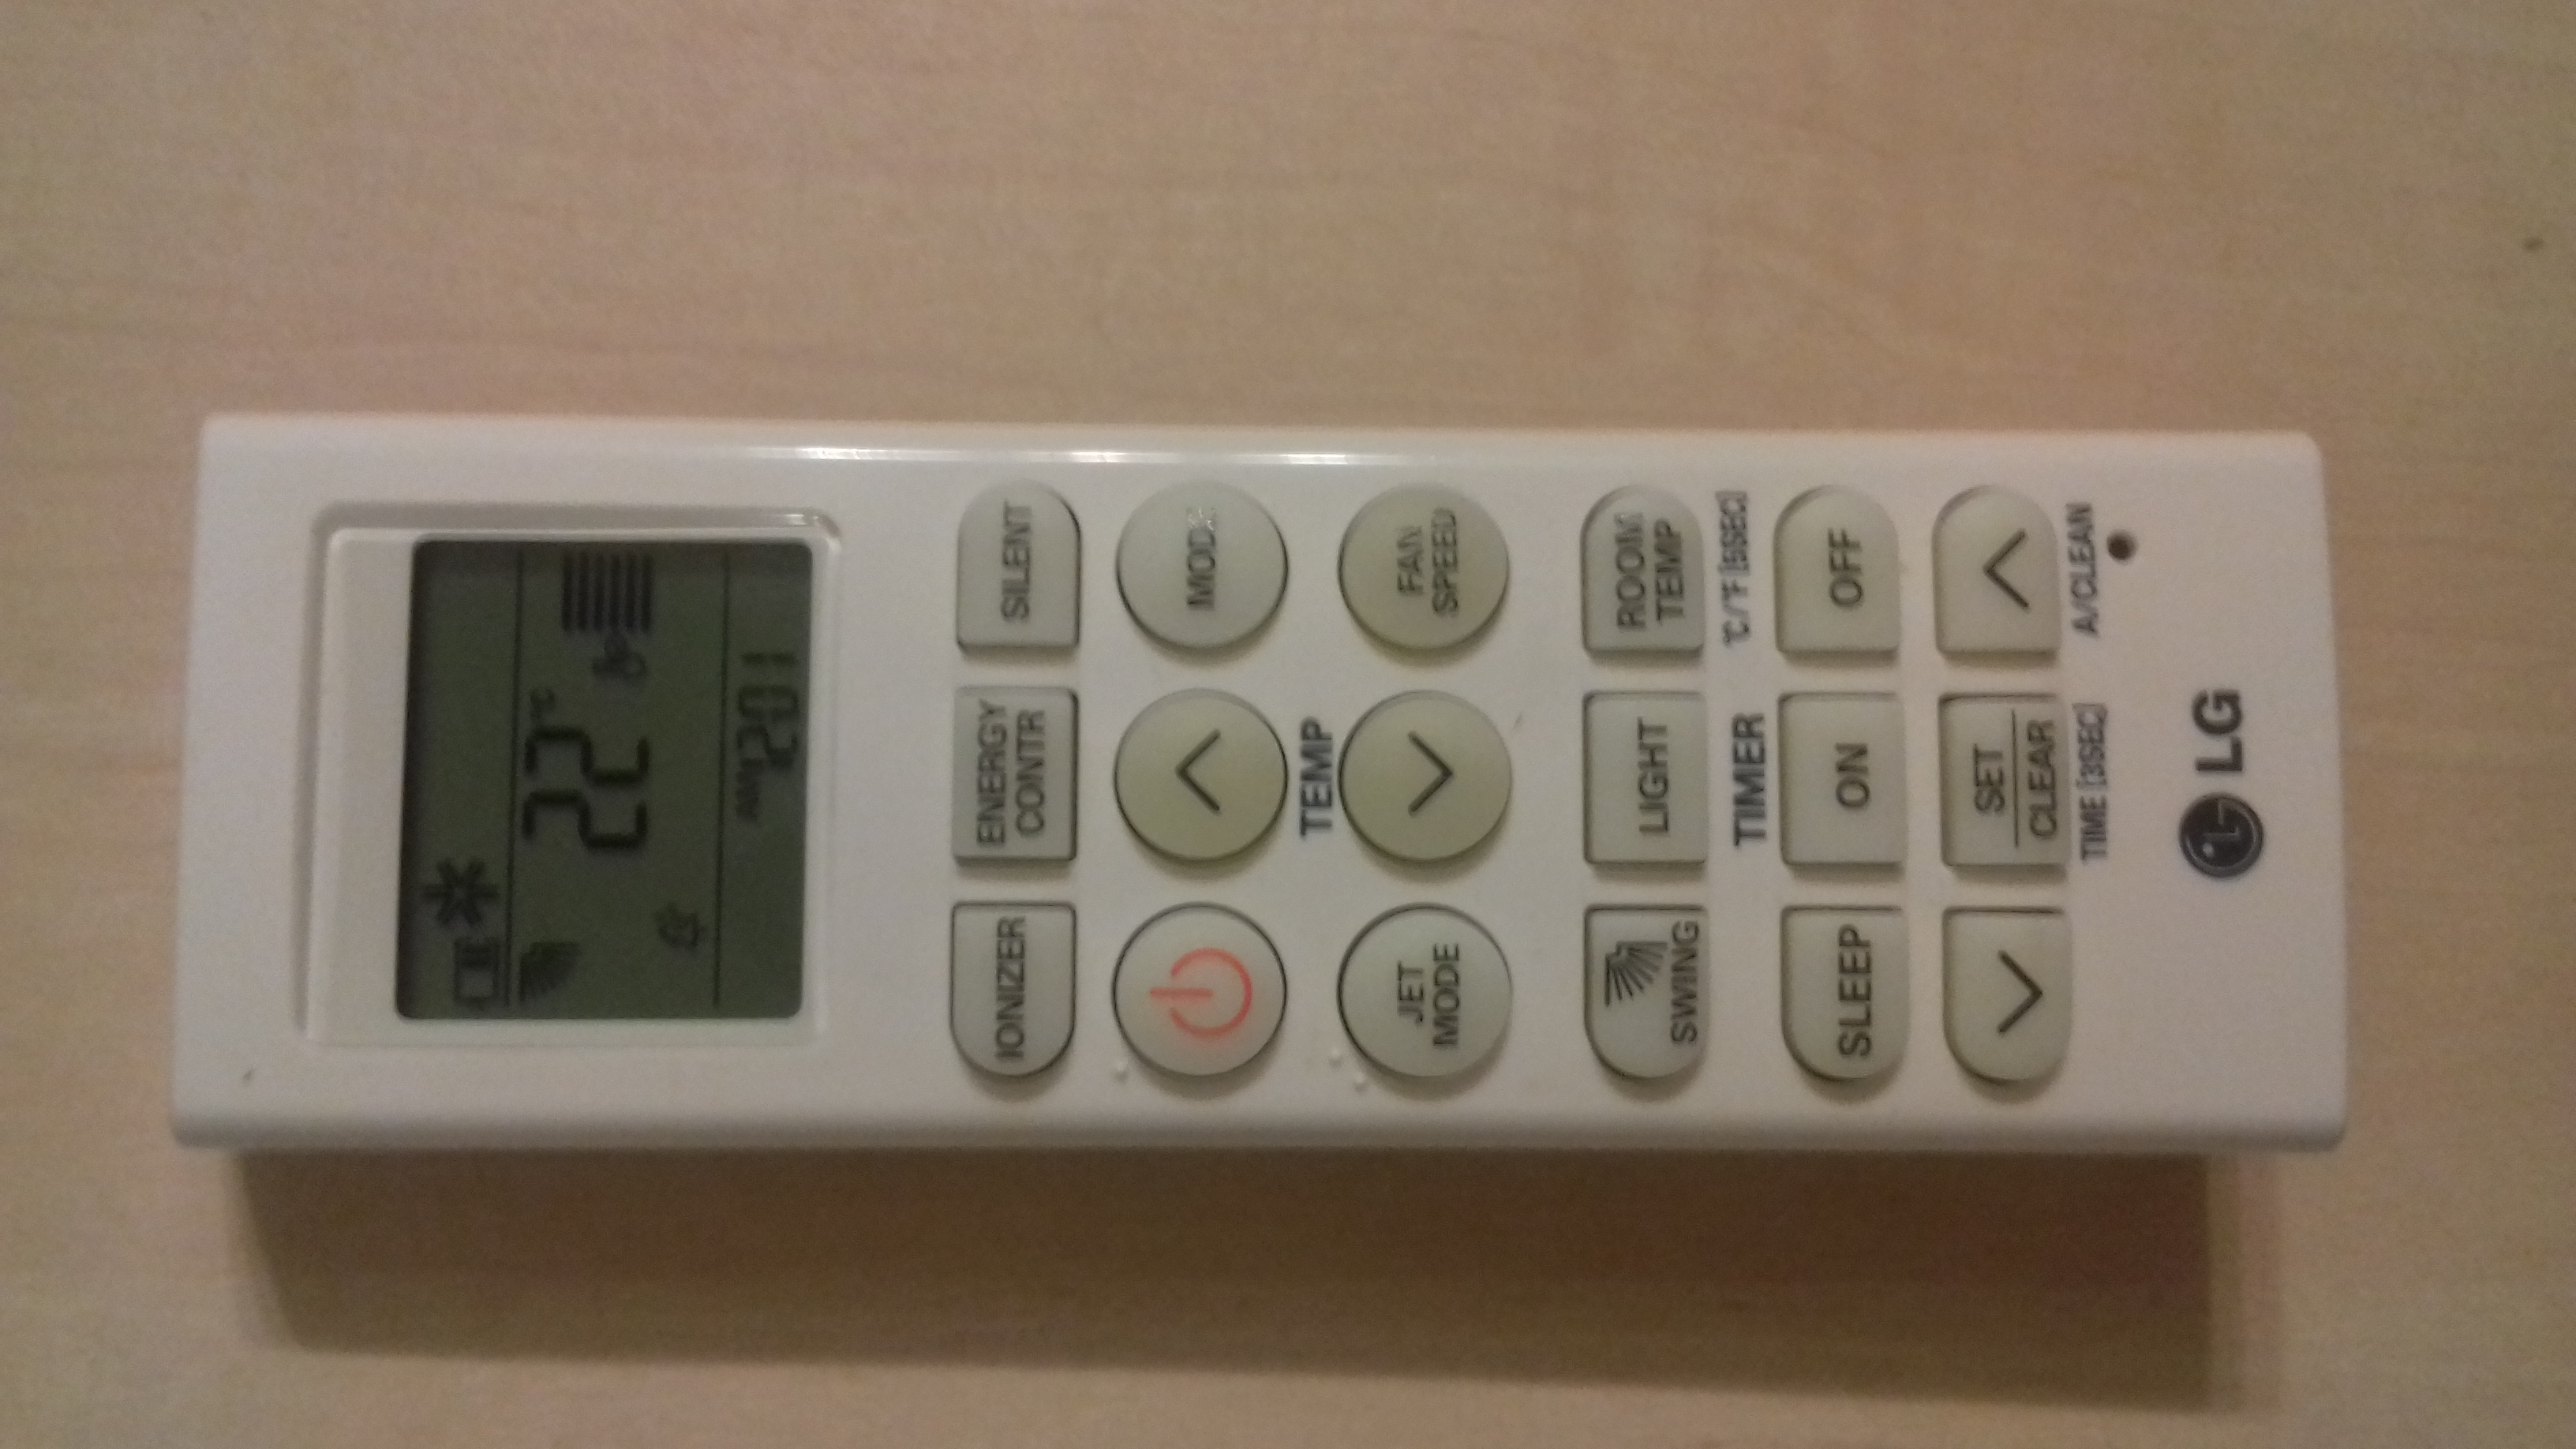 Figure 1 - Original AC remote (model AKB73456113)